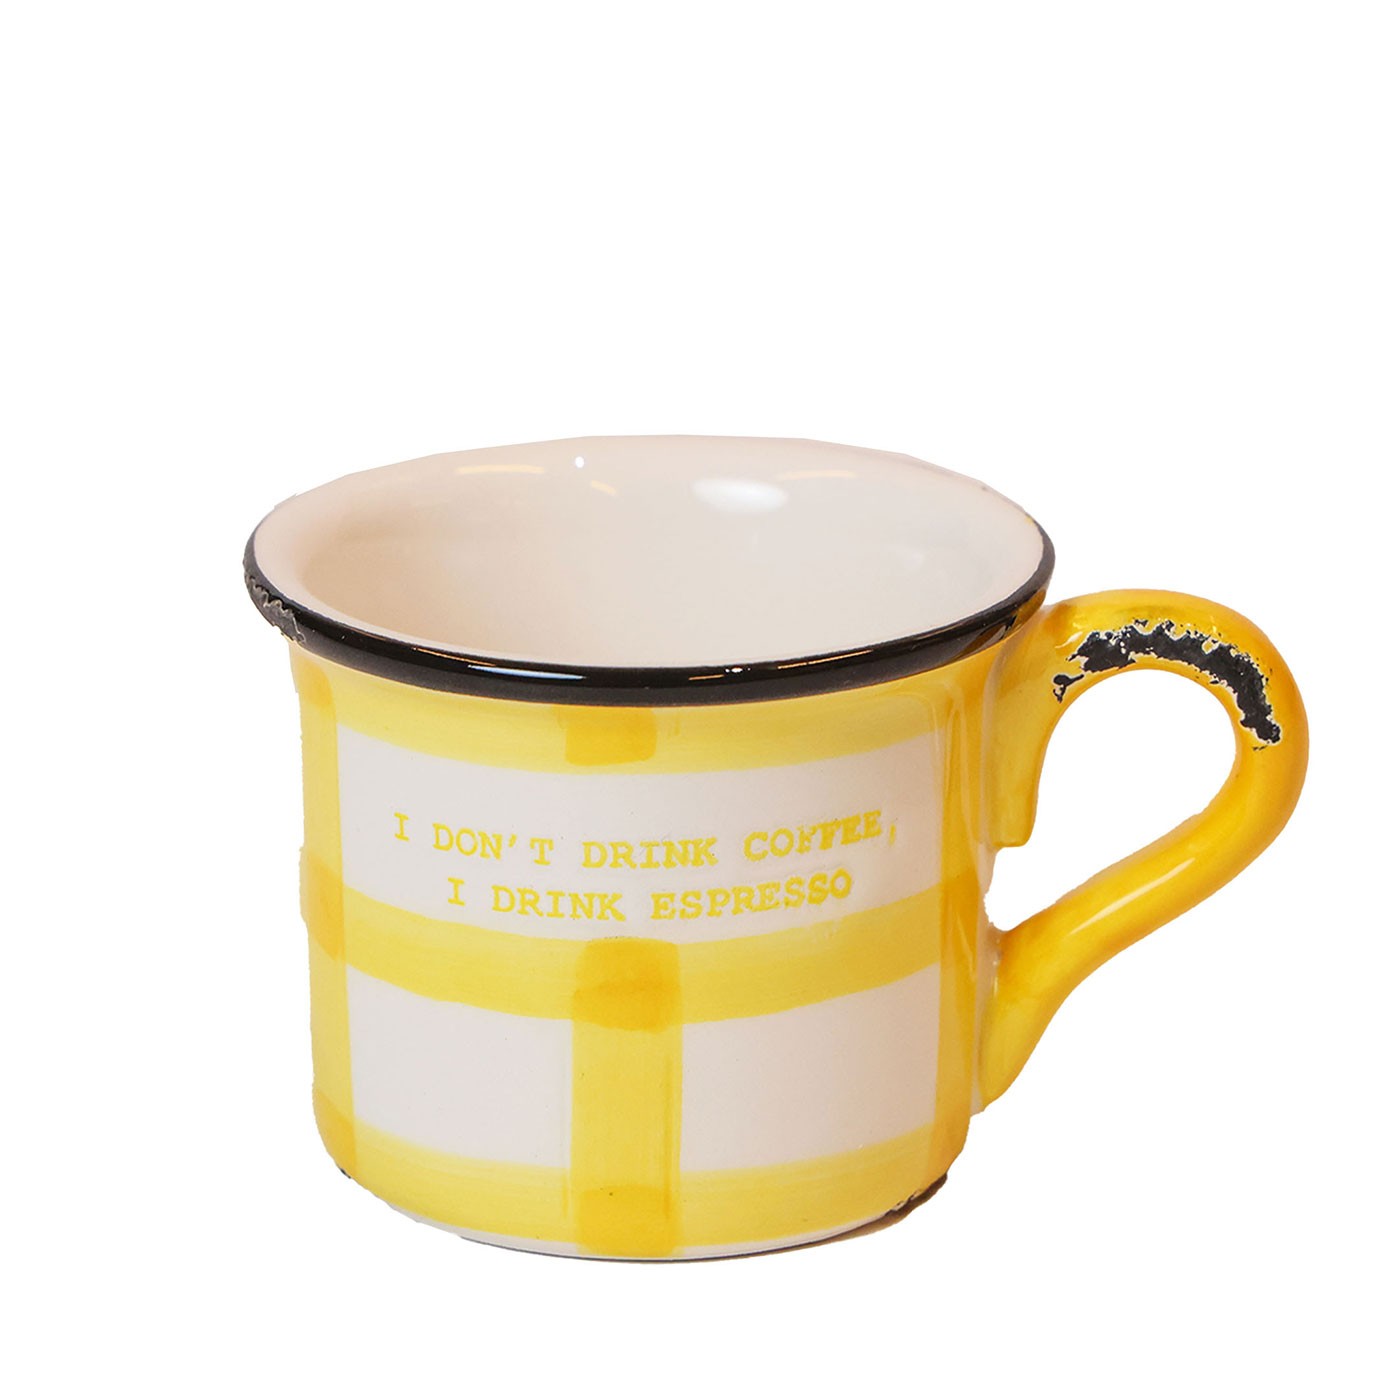 Eataly White and Yellow Checked Mug